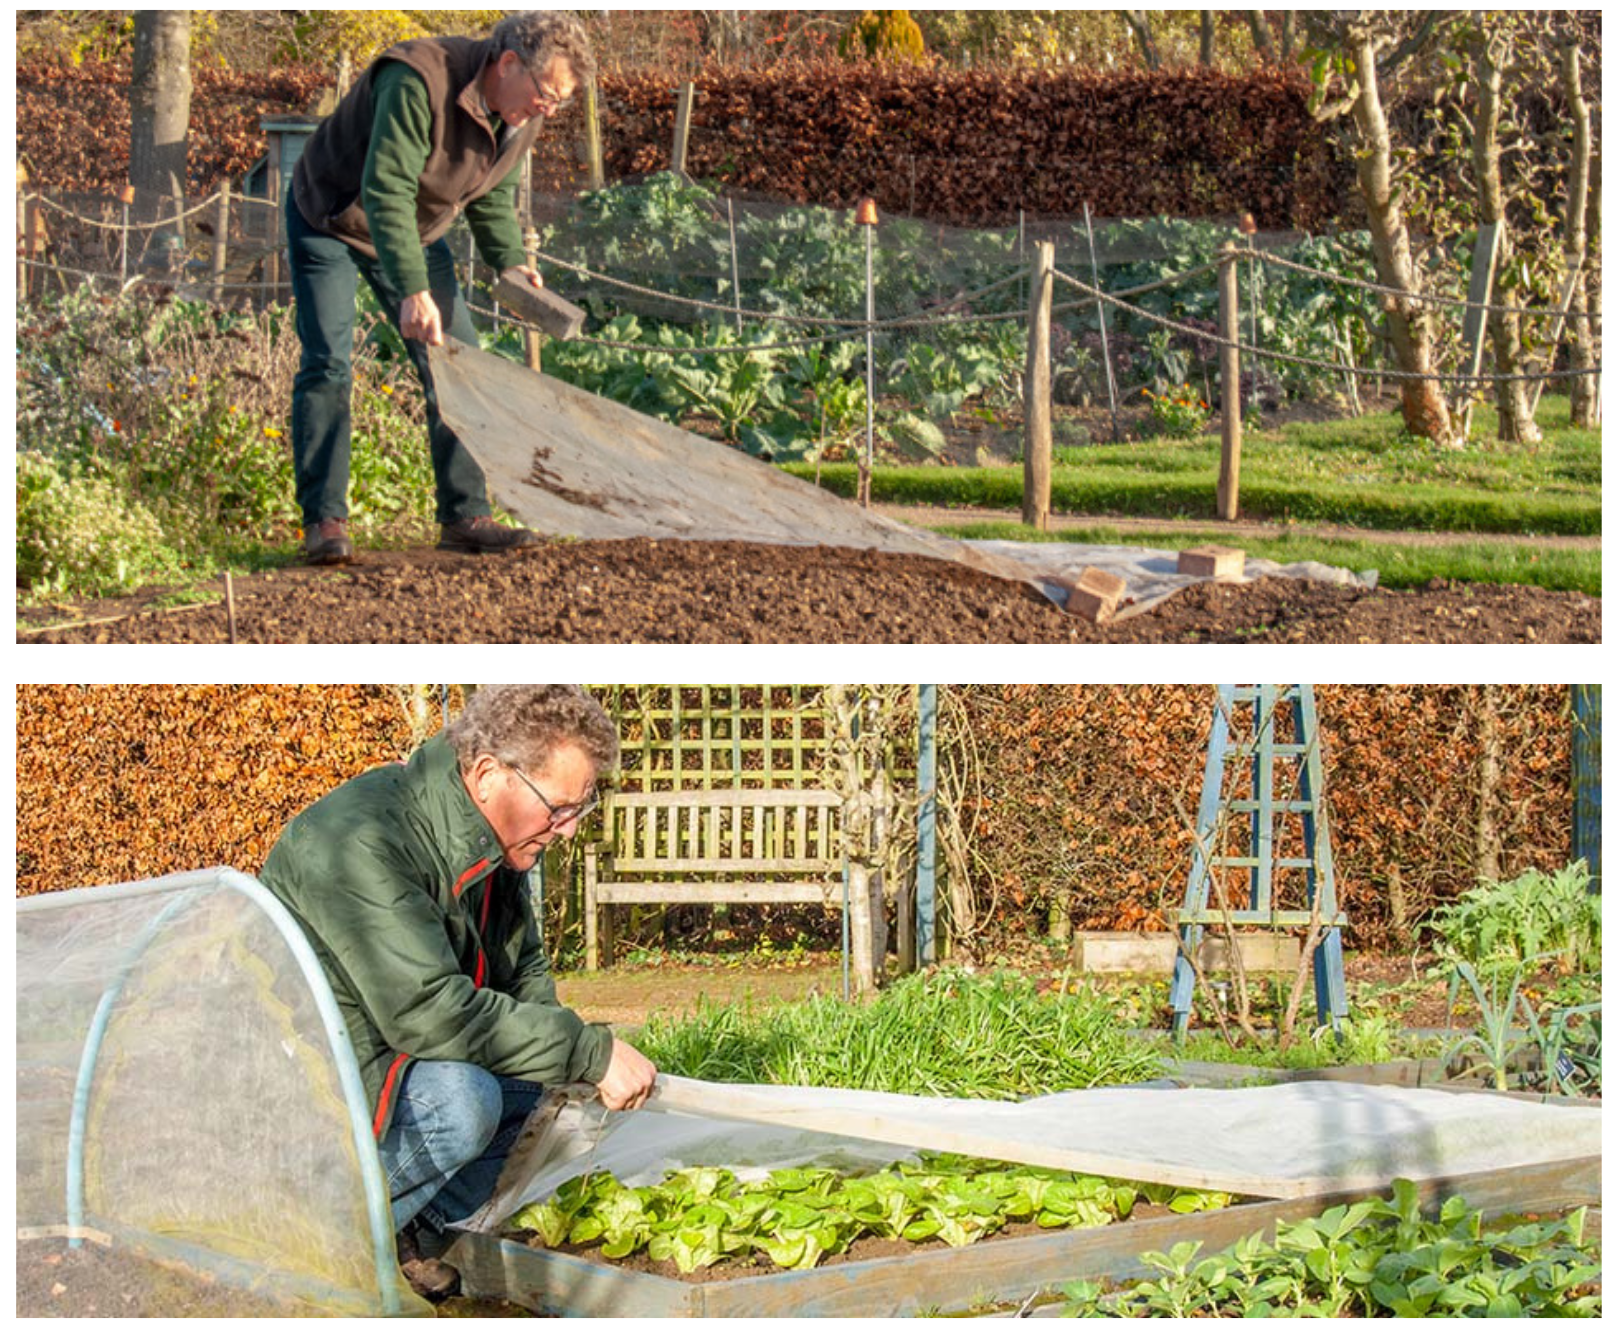 December gardening tips from Barnsdale Gardens